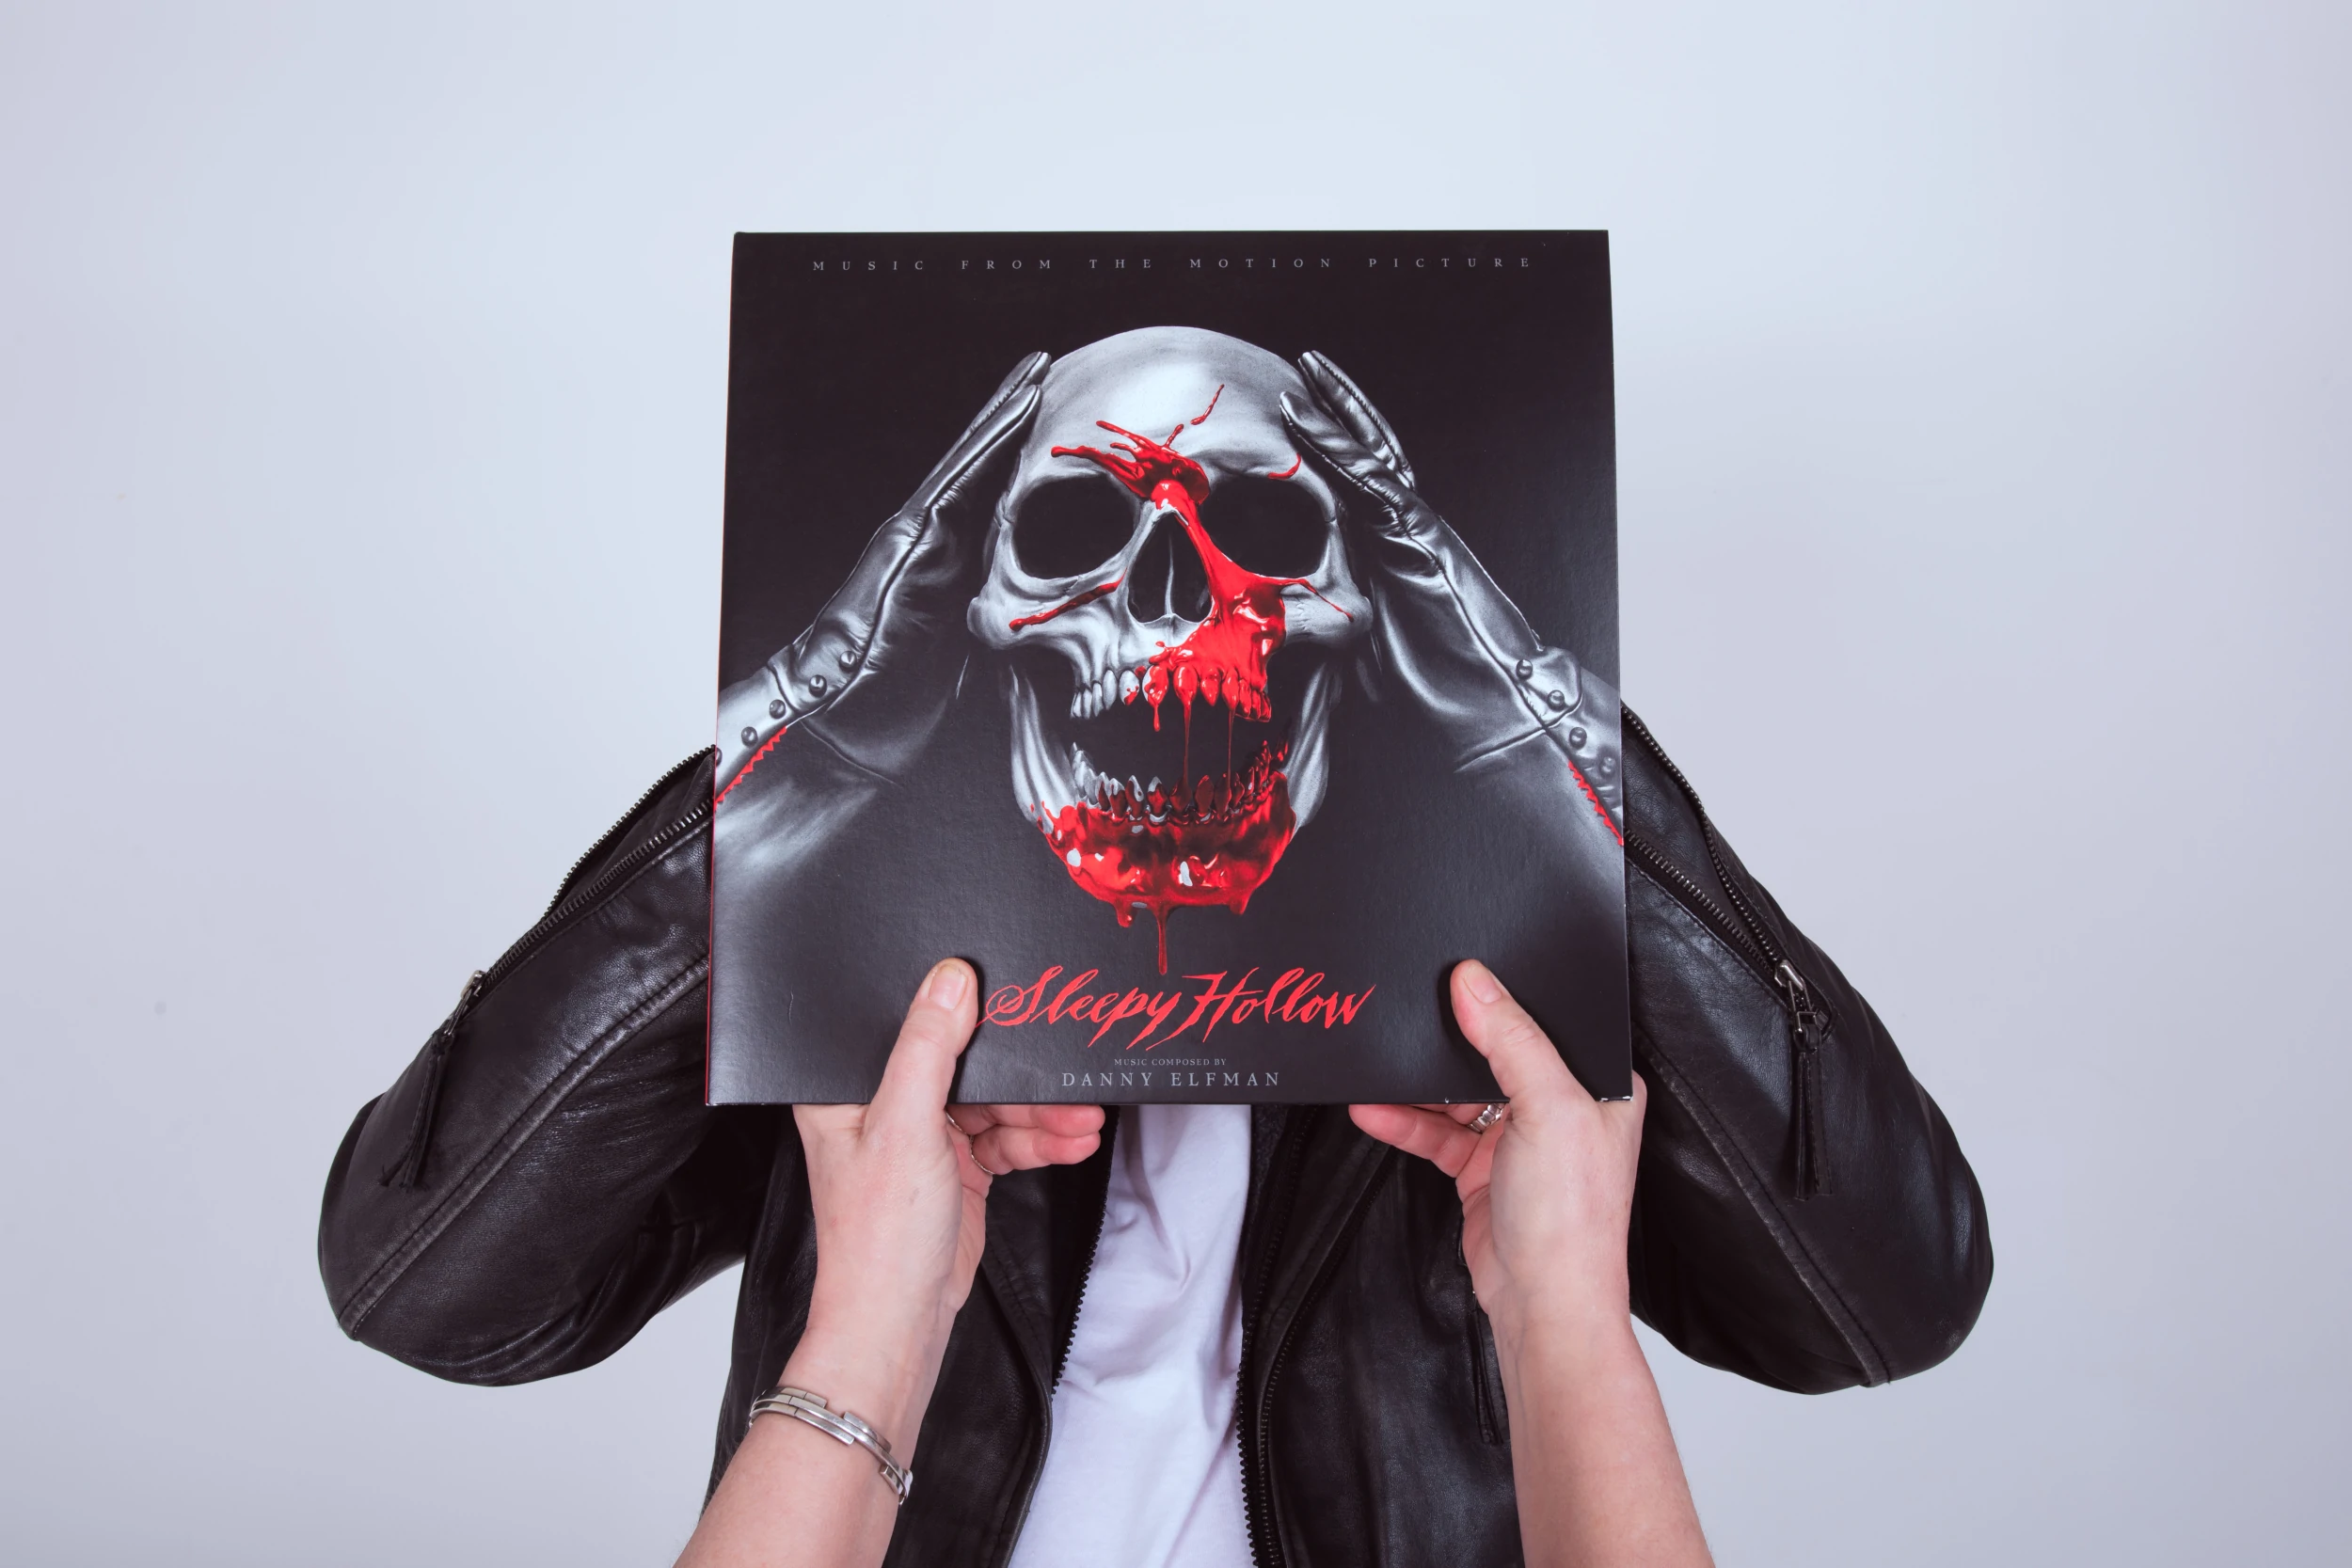 Ste Clarke Copywriter and Sleepy Hollow soundtrack vinyl album cover